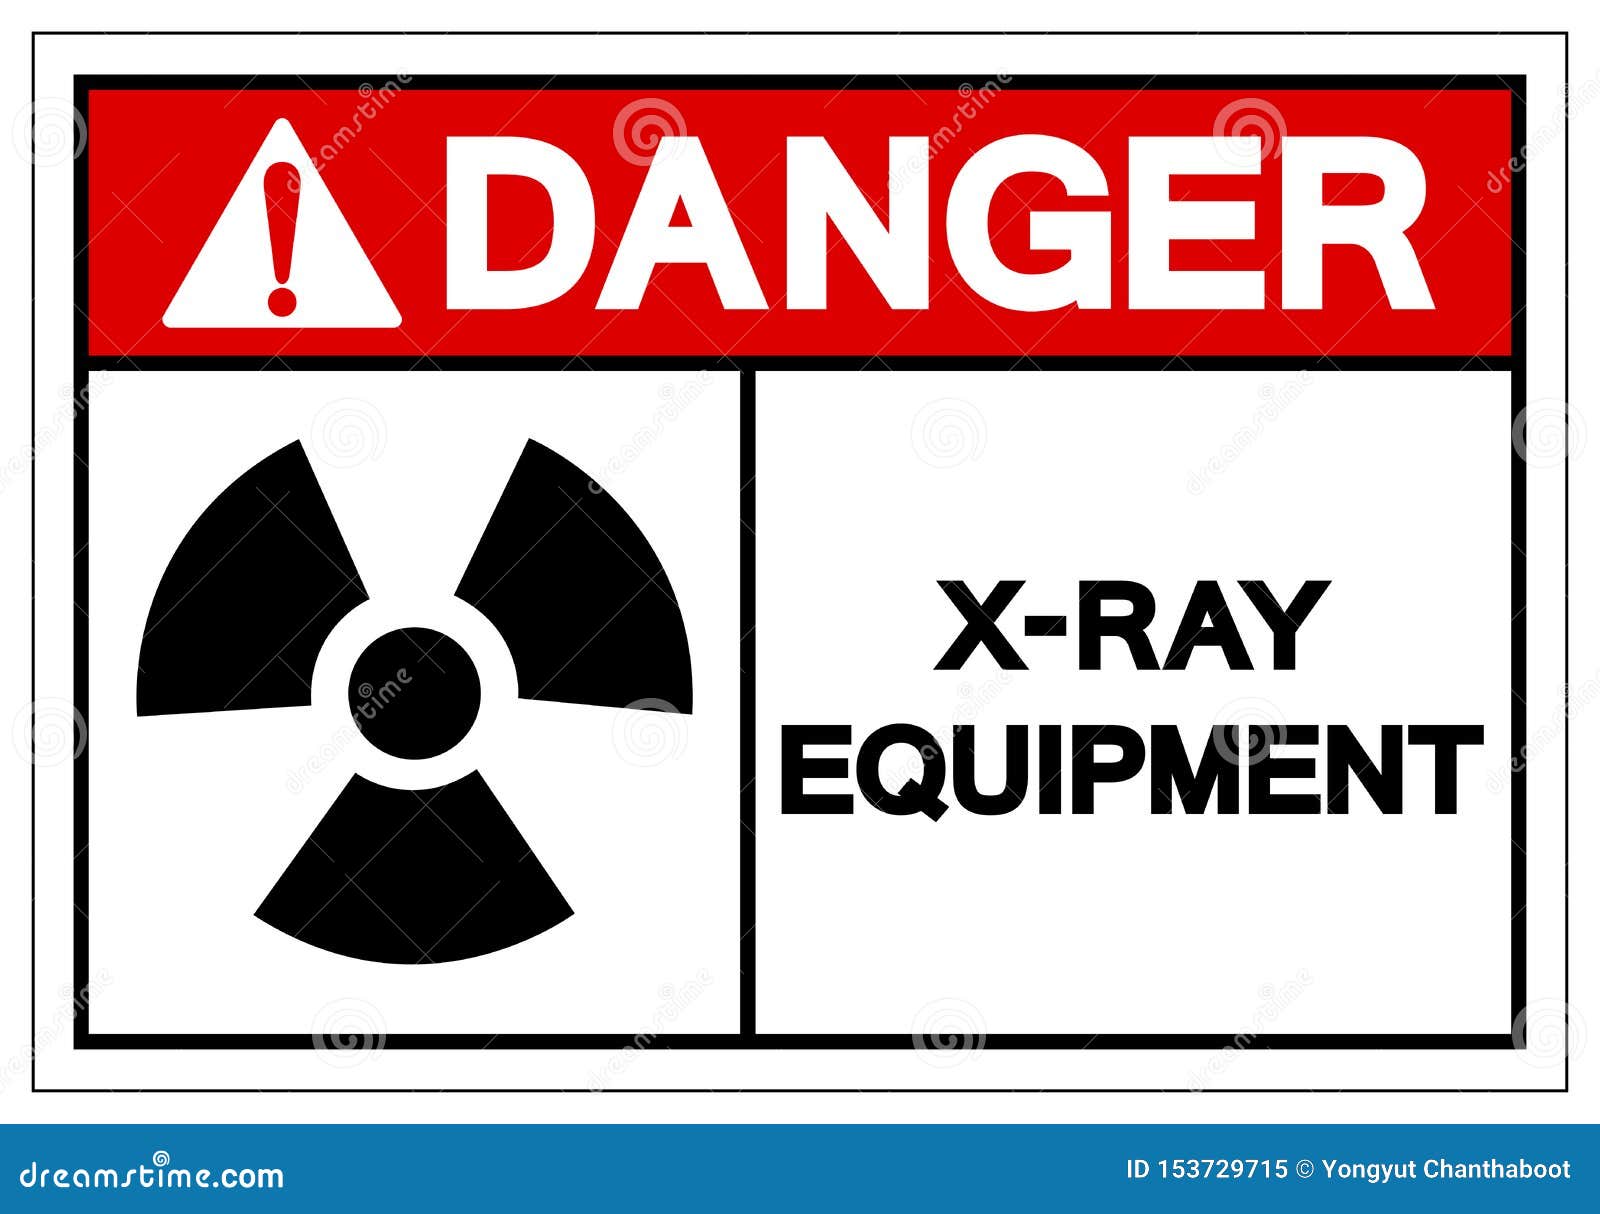 Danger X-Ray Equipment Symbol Sign, Vector Illustration, Isolate on ...